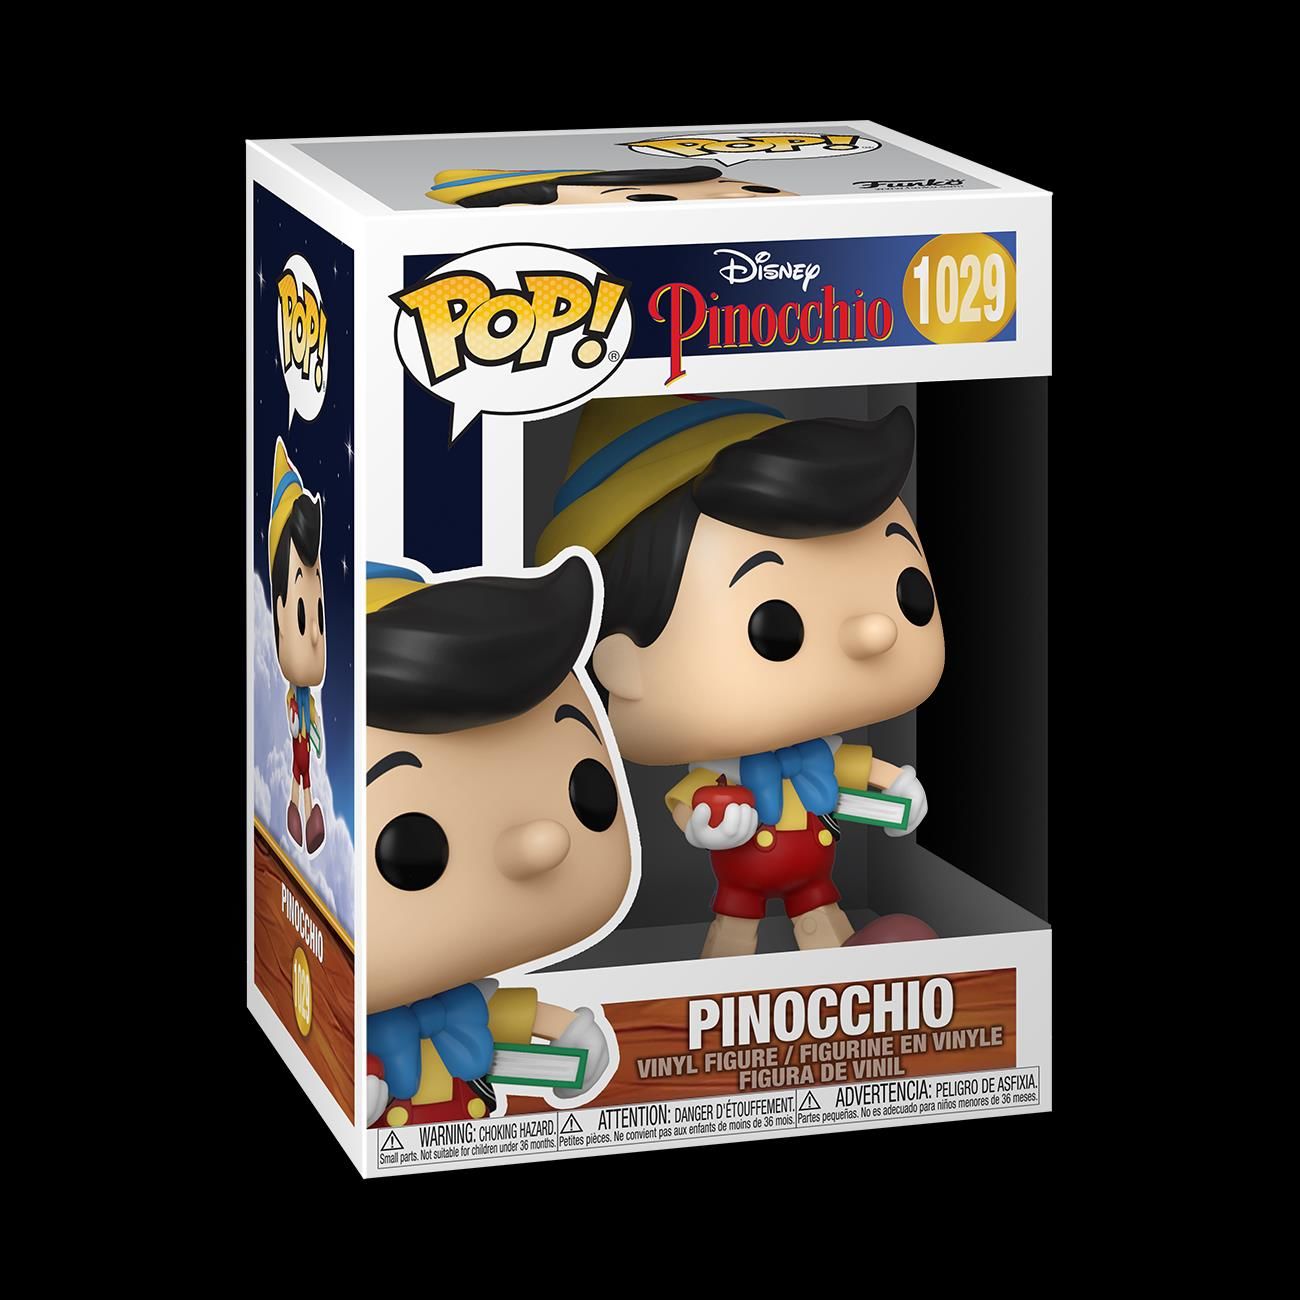 Funko Pop! Disney: Pinocchio - Pinocchio